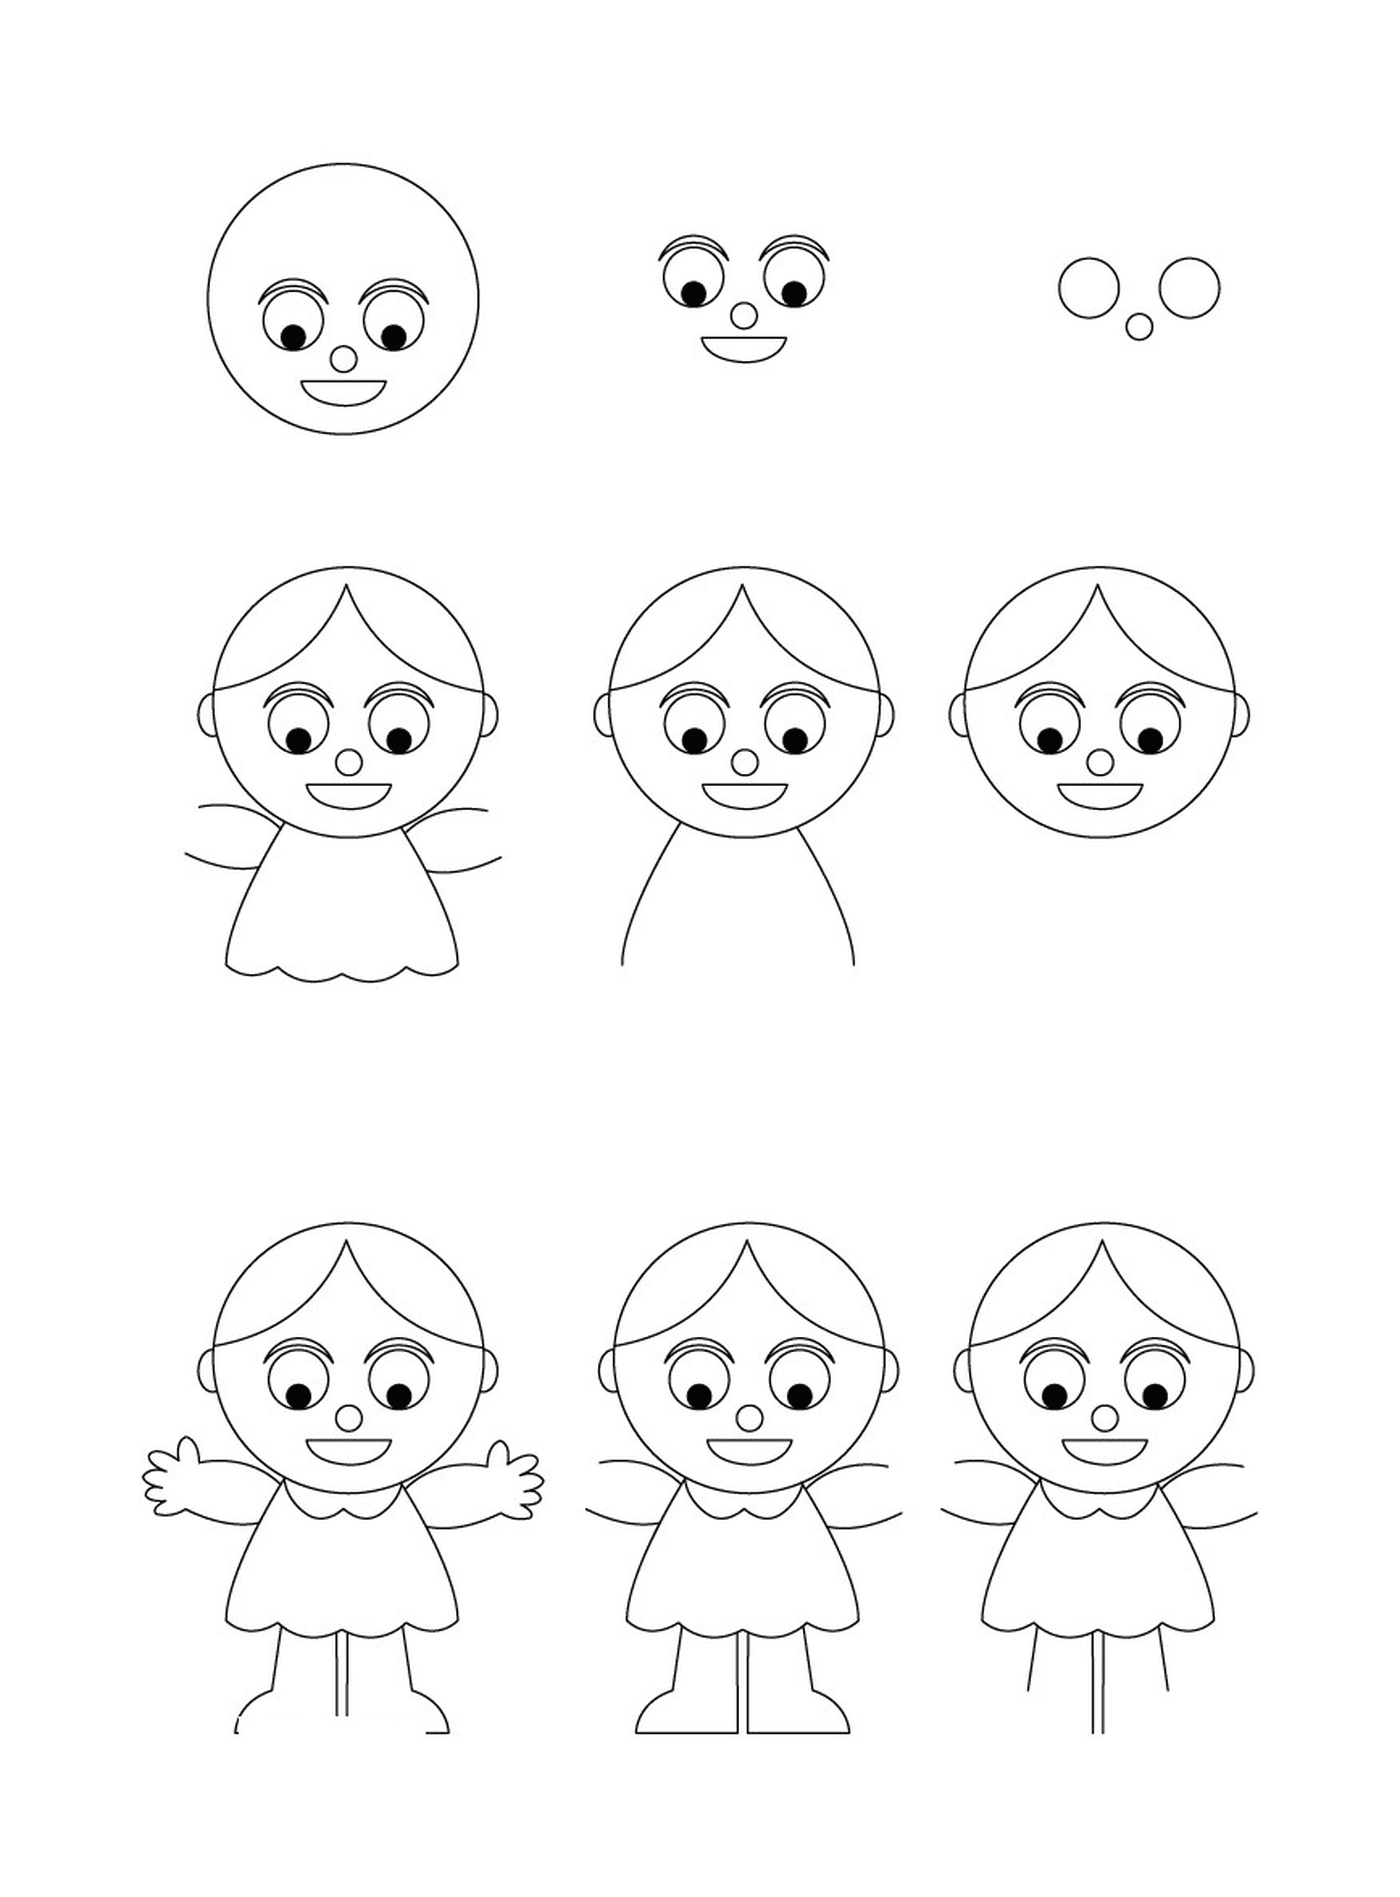  Cómo dibujar una muñeca 